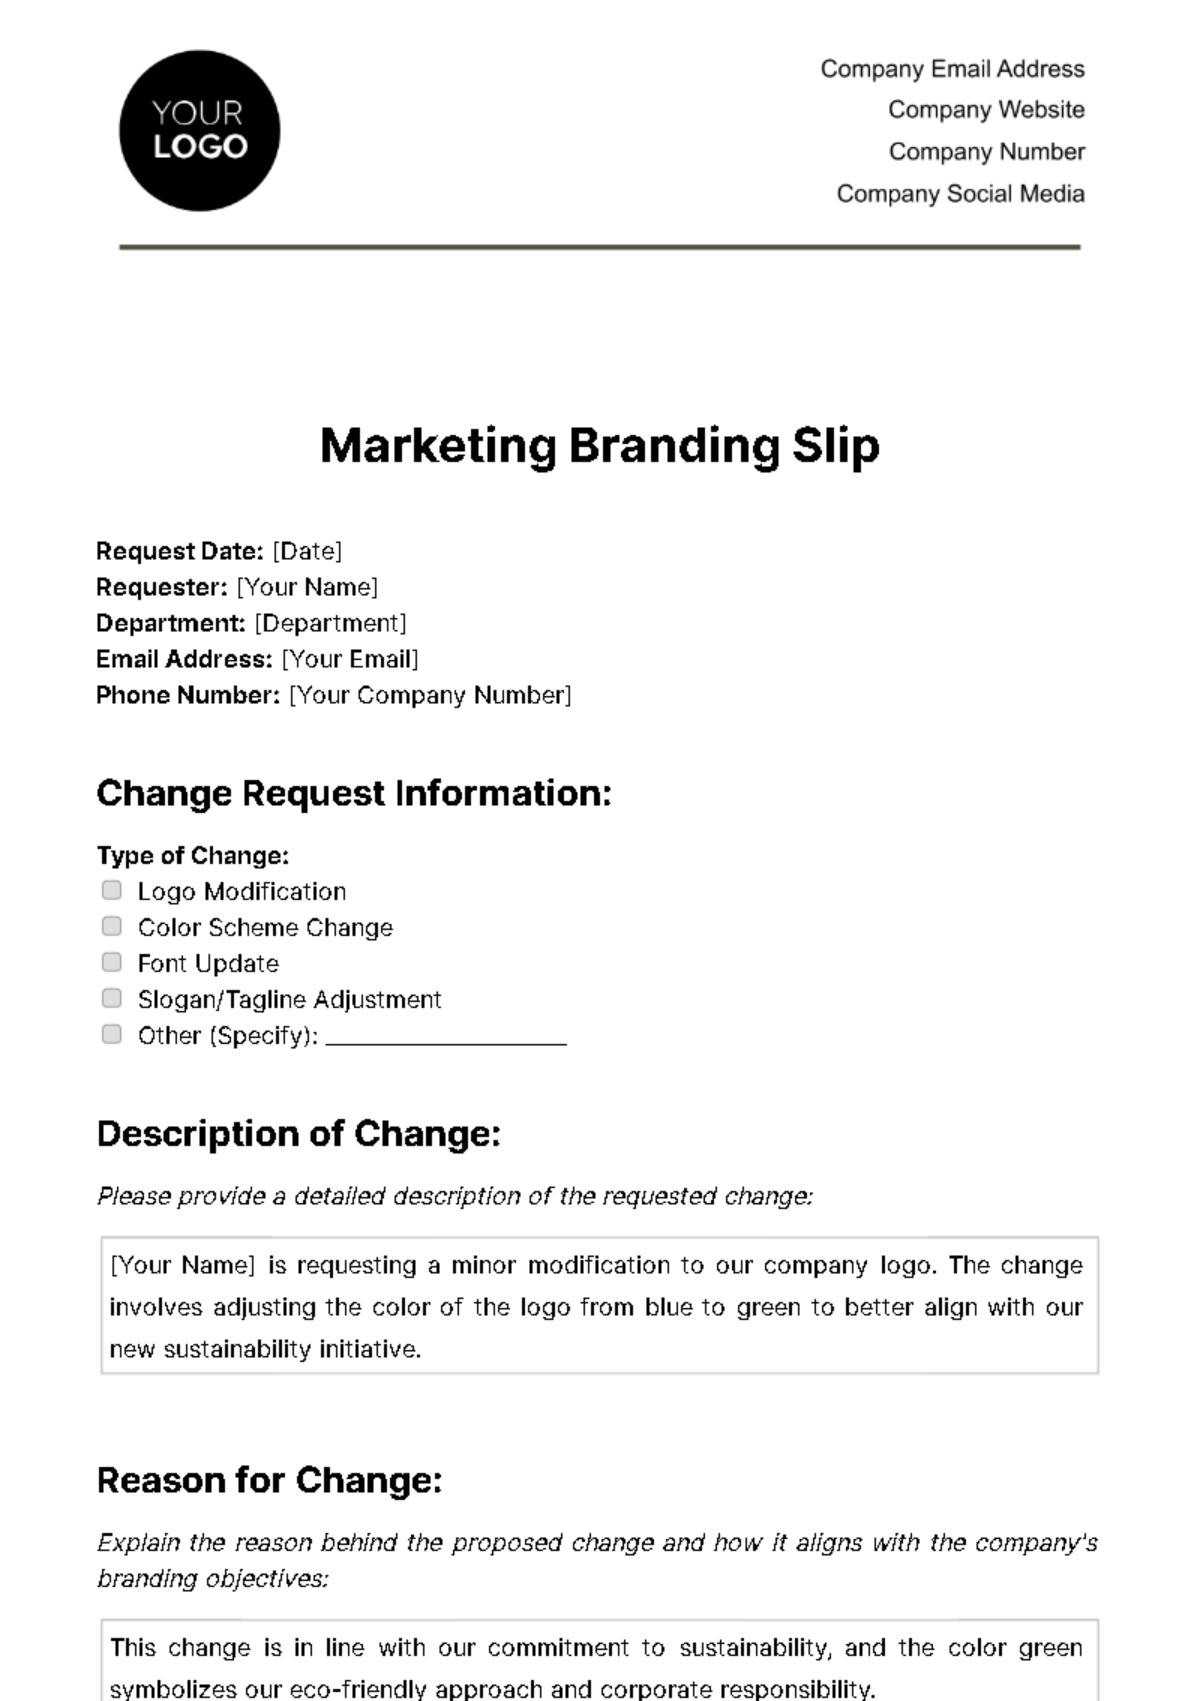 Marketing Branding Slip Template